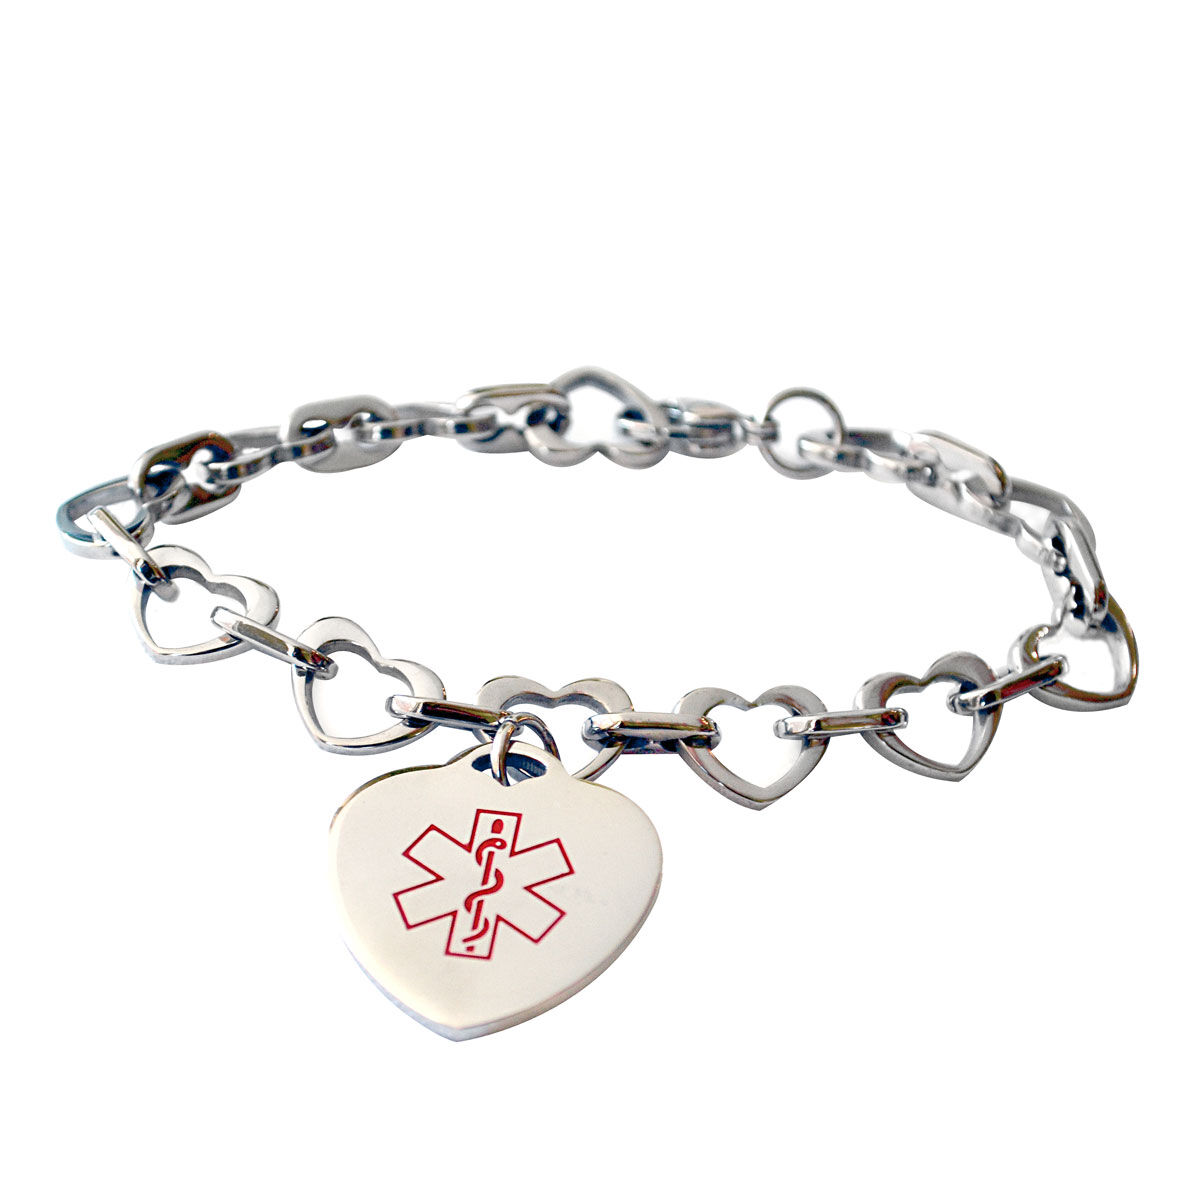 Sterling Silver Chain Link Charm Bracelet 6.3MM, Standard Women's Adult  Size 7.5 | Michele Benjamin - Jewelry Design